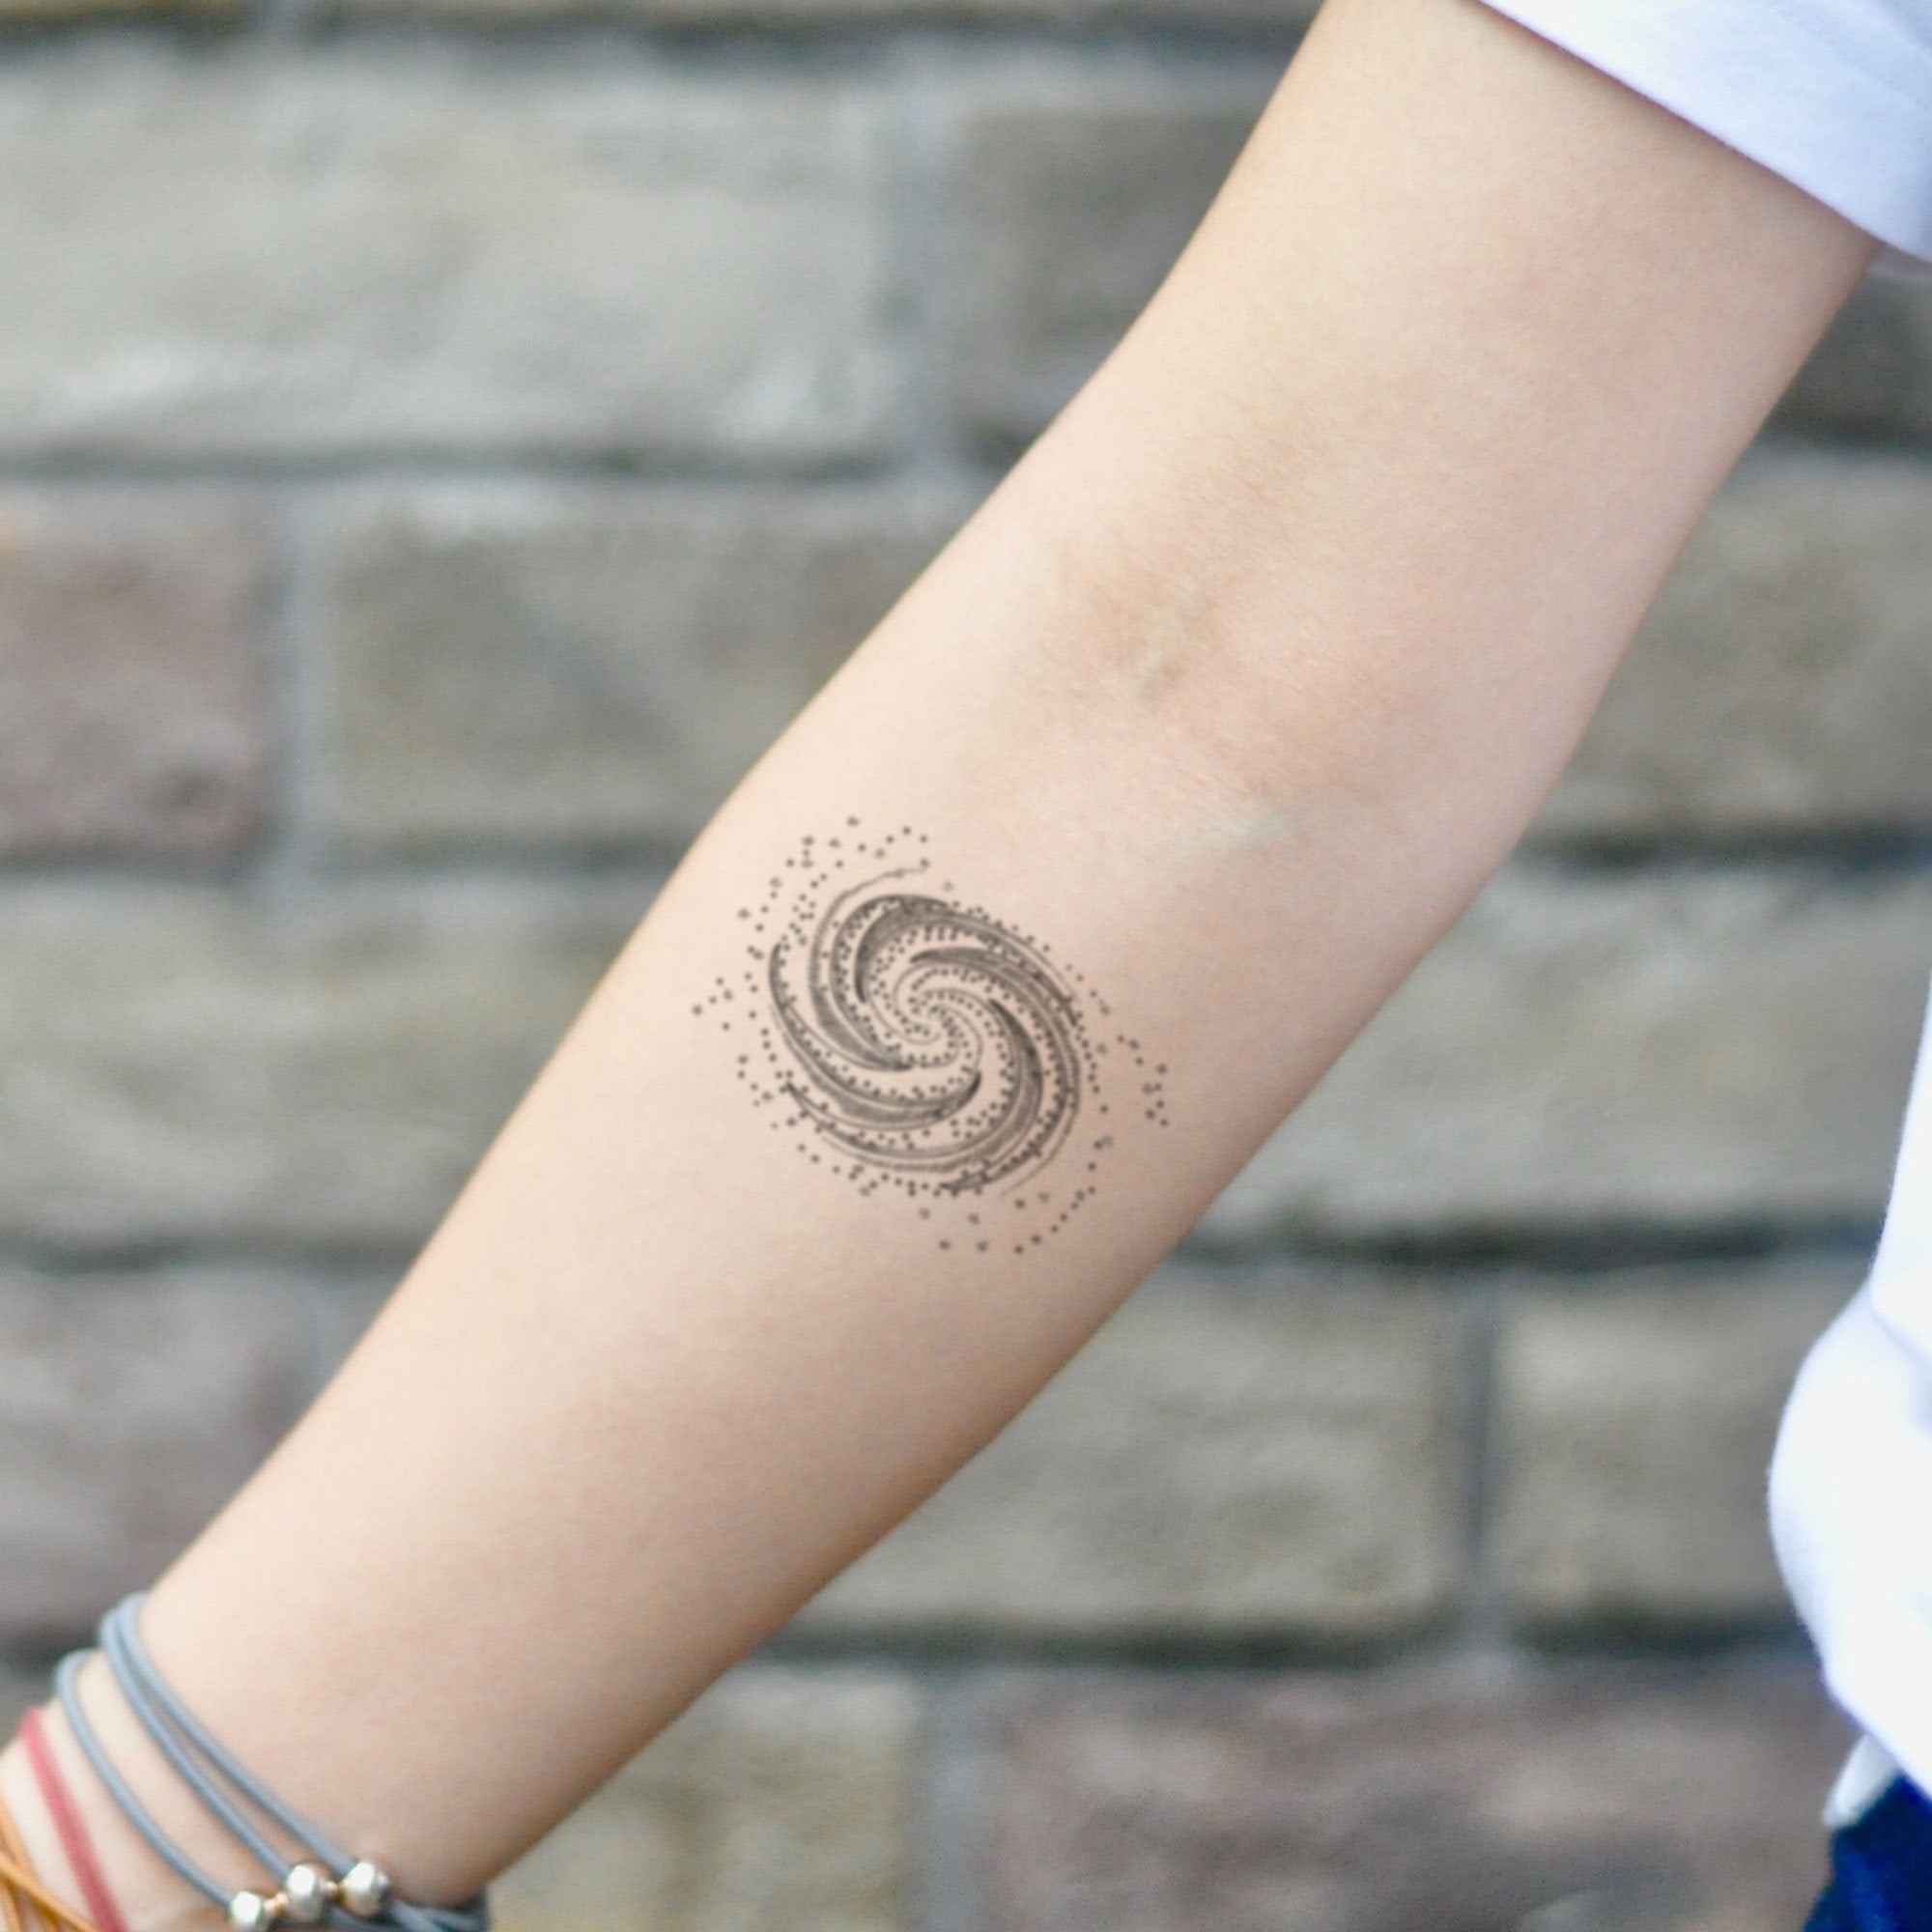 Planets tattoo design by senioreta4 on DeviantArt